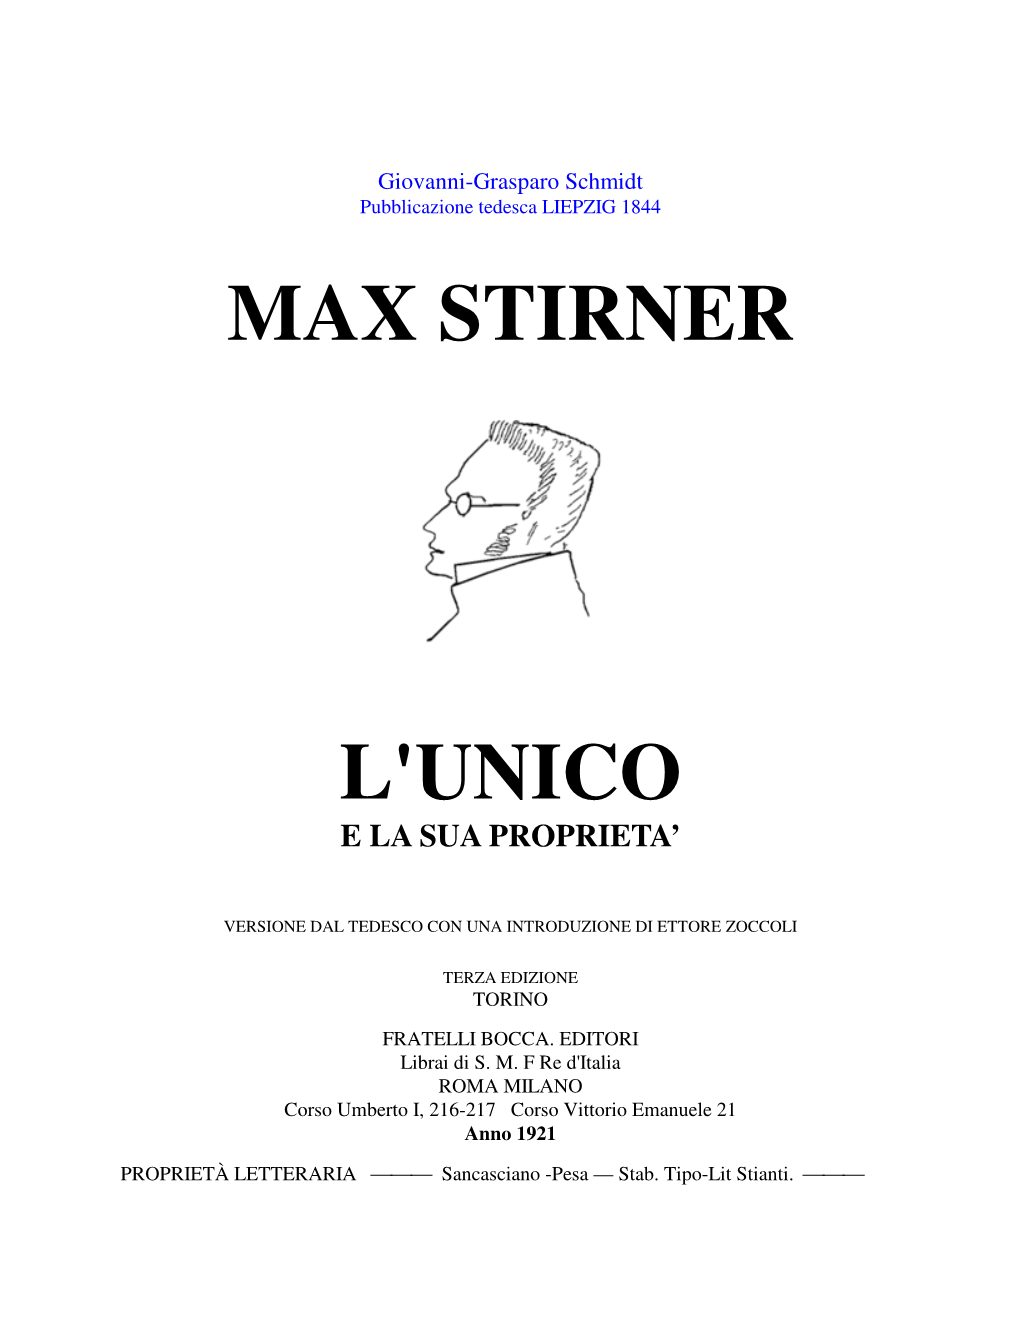 Max Stirner L'unico